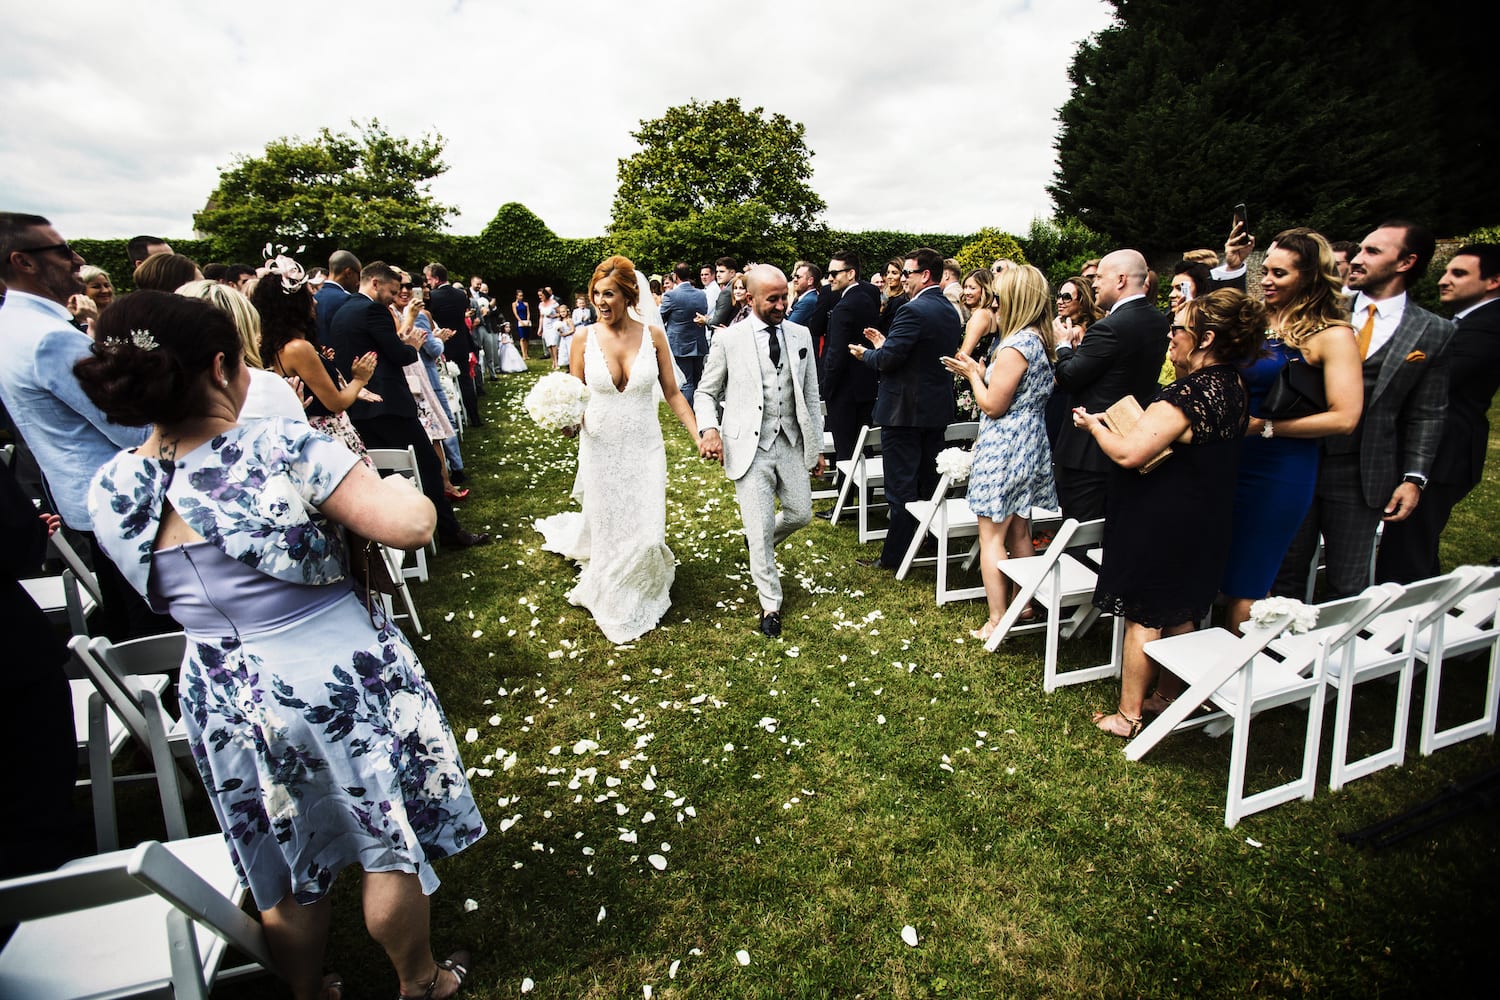 Notley Abbey Wedding outdoor ceremony aisle petal confetti inspiration